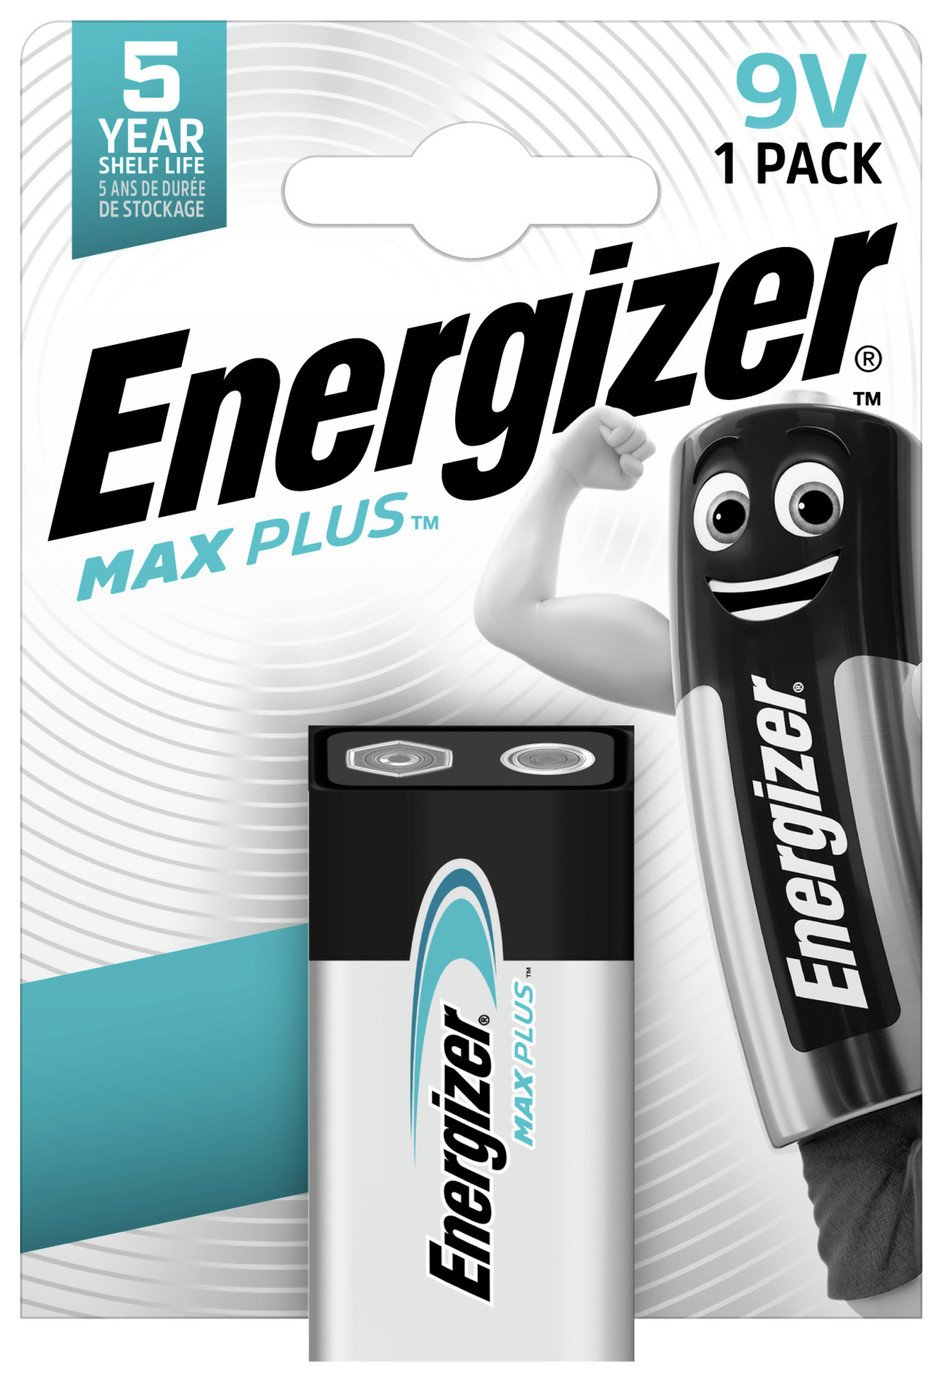 Energizer Max Plus 9v Alkaline Battery review